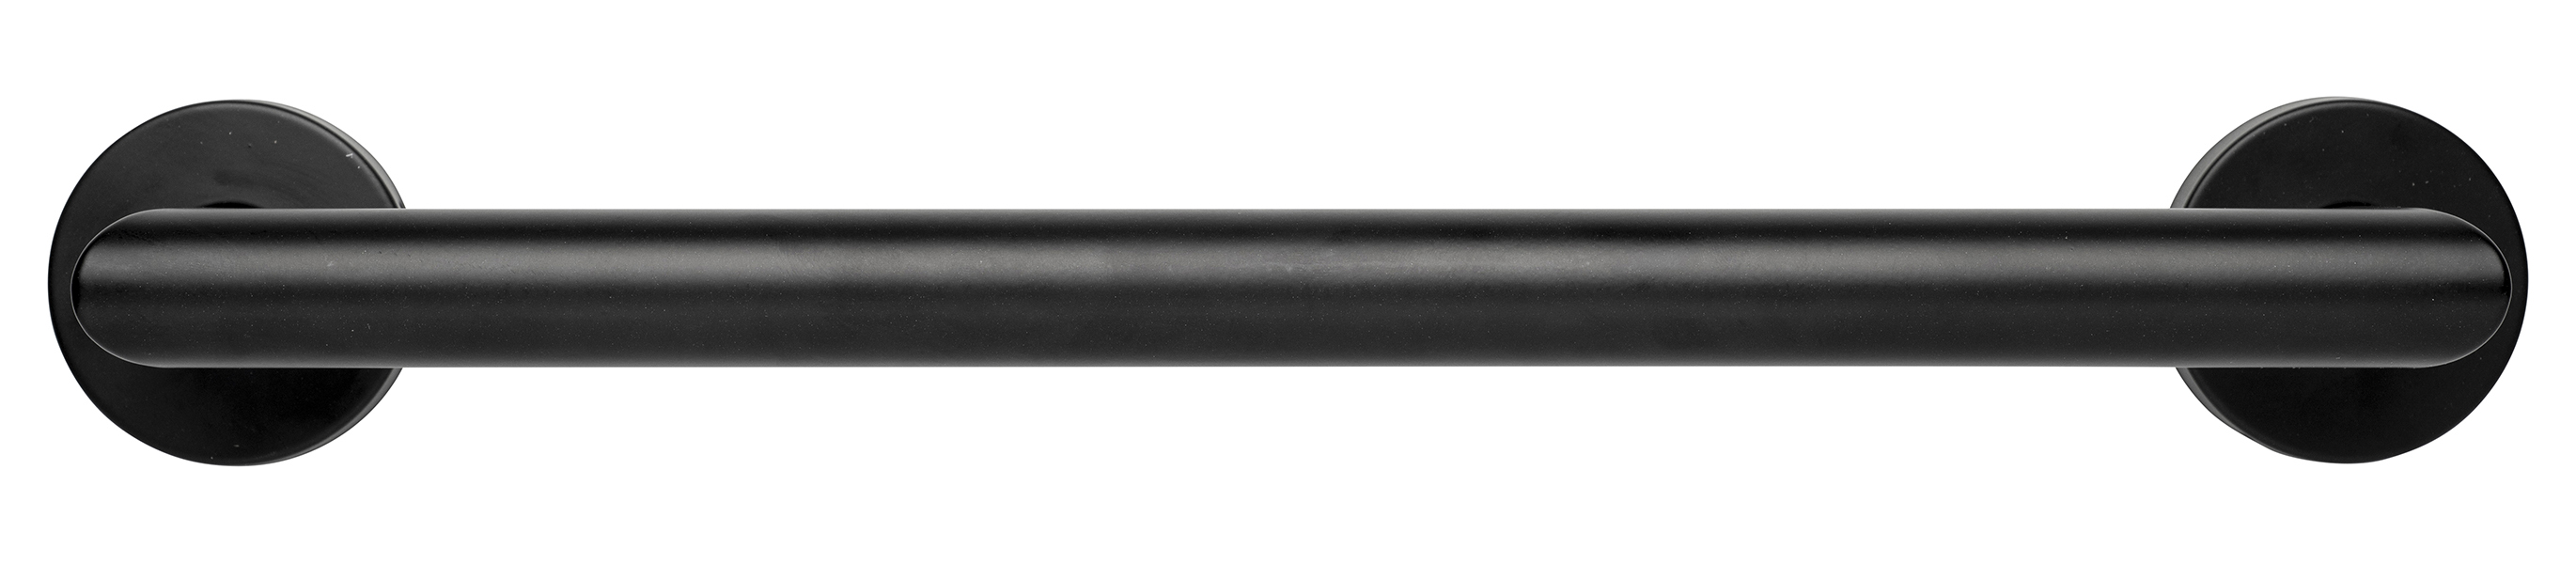 Image of Croydex Straight Black Grab Bar - 300mm